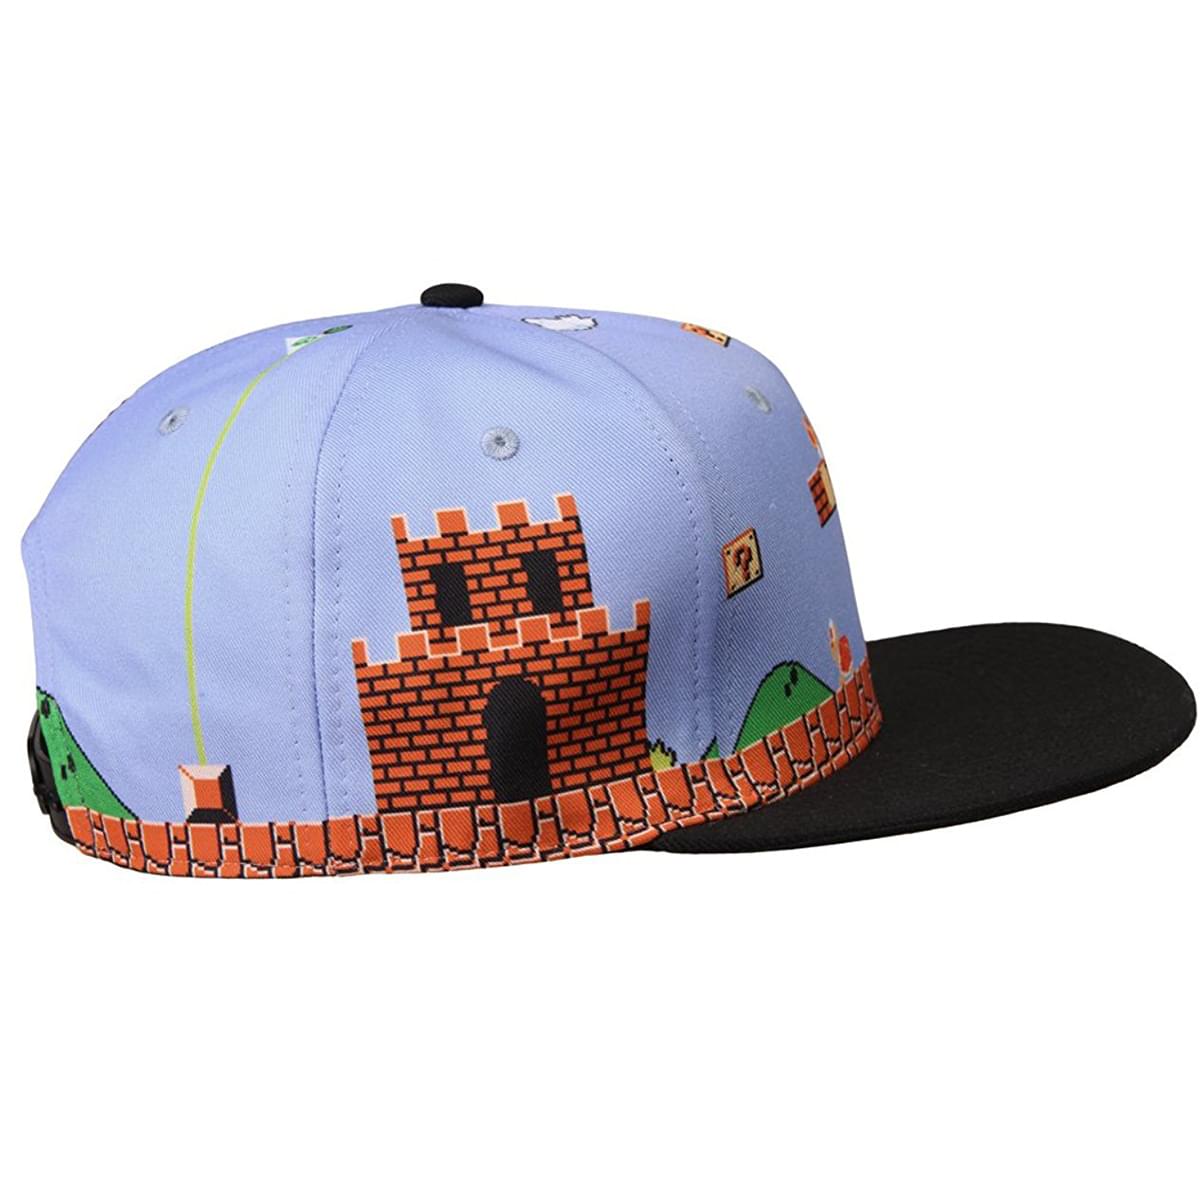 Super Mario Bros. 8-bit Landscape Snapback Hat